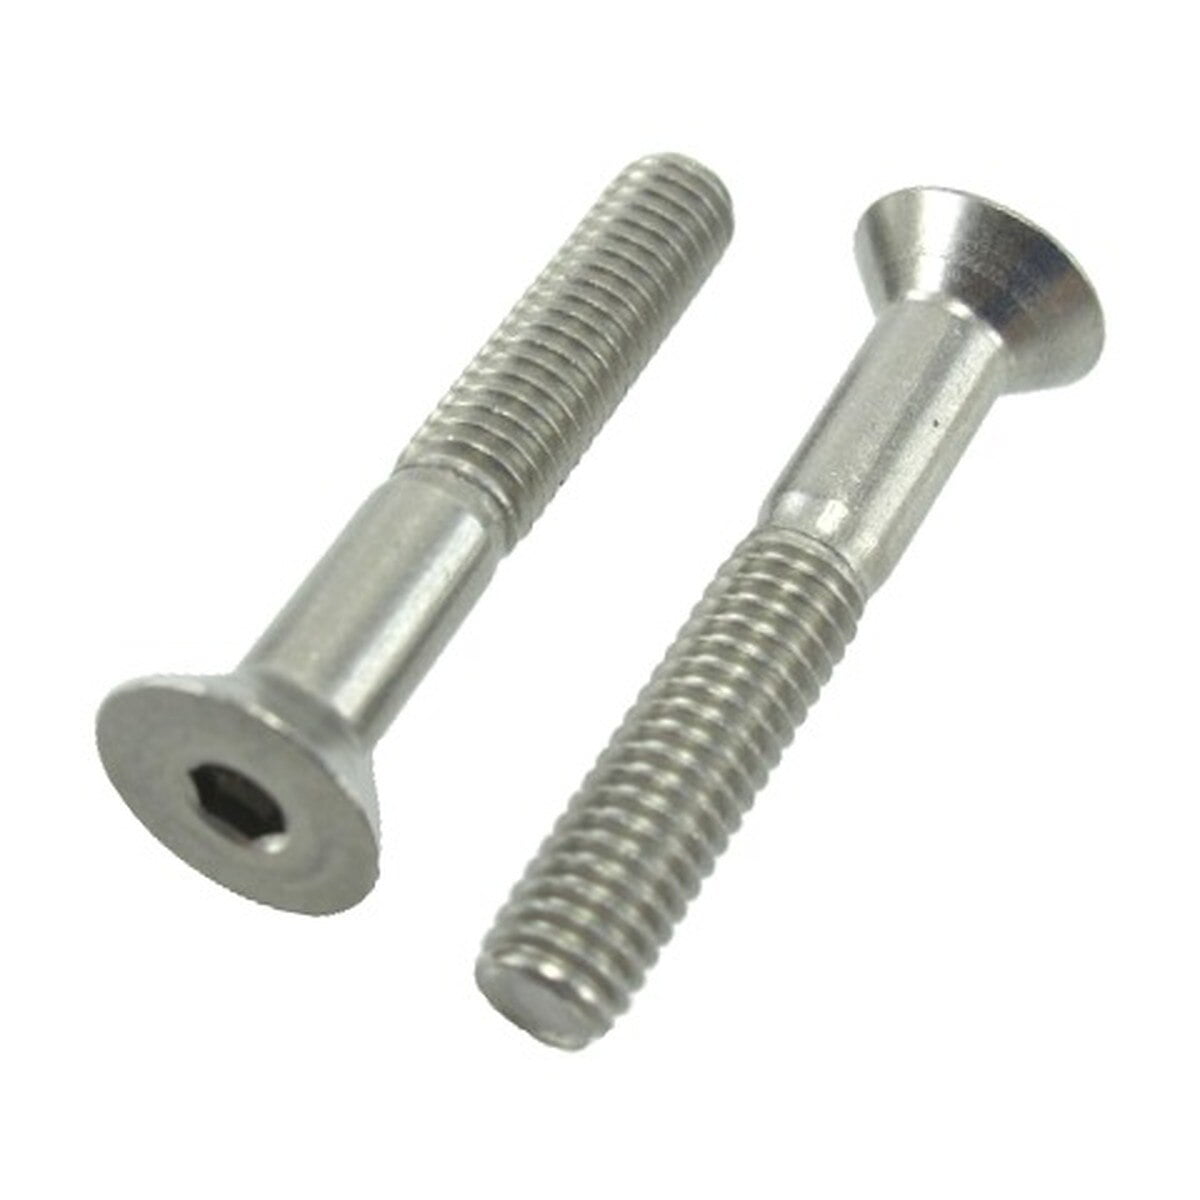 Button Socket Cap Screws 316 Stainless Steel marine Grade 10-32 X 3/4" Qty 10 